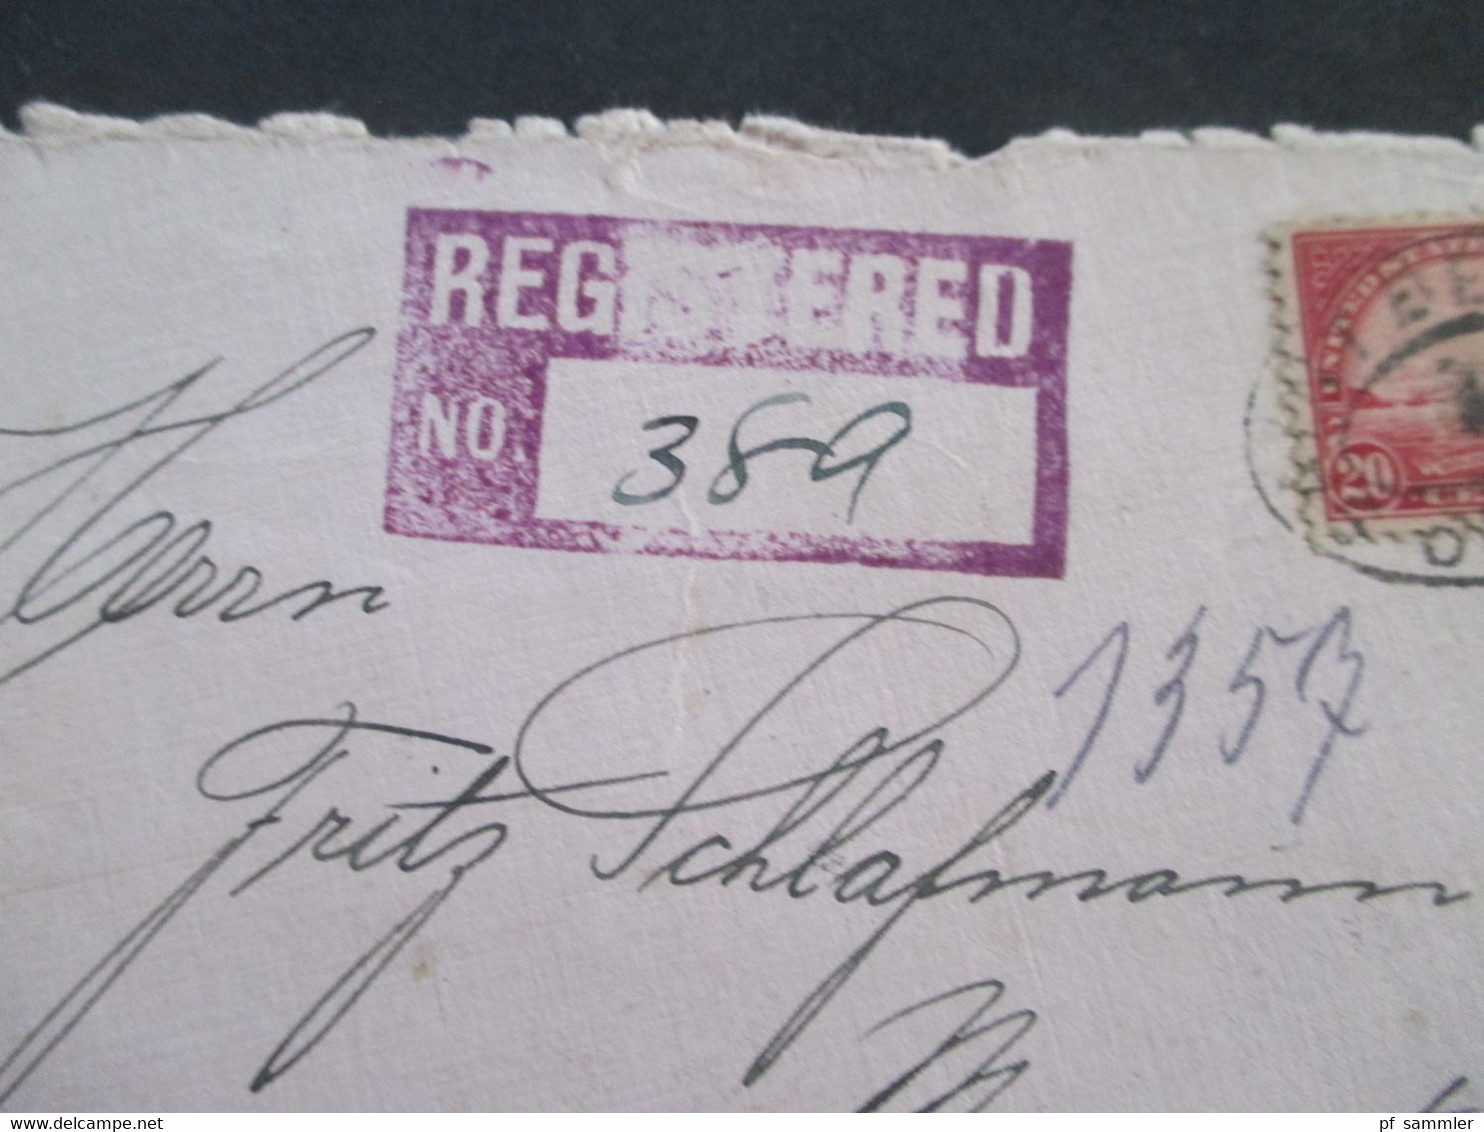 USA 1922 Nr. 279 EF Verwendet 1926 Registered Letter über Cöln Nach Pirmasens Rückseitig 7 Stempel SST Pirmasens - Cartas & Documentos